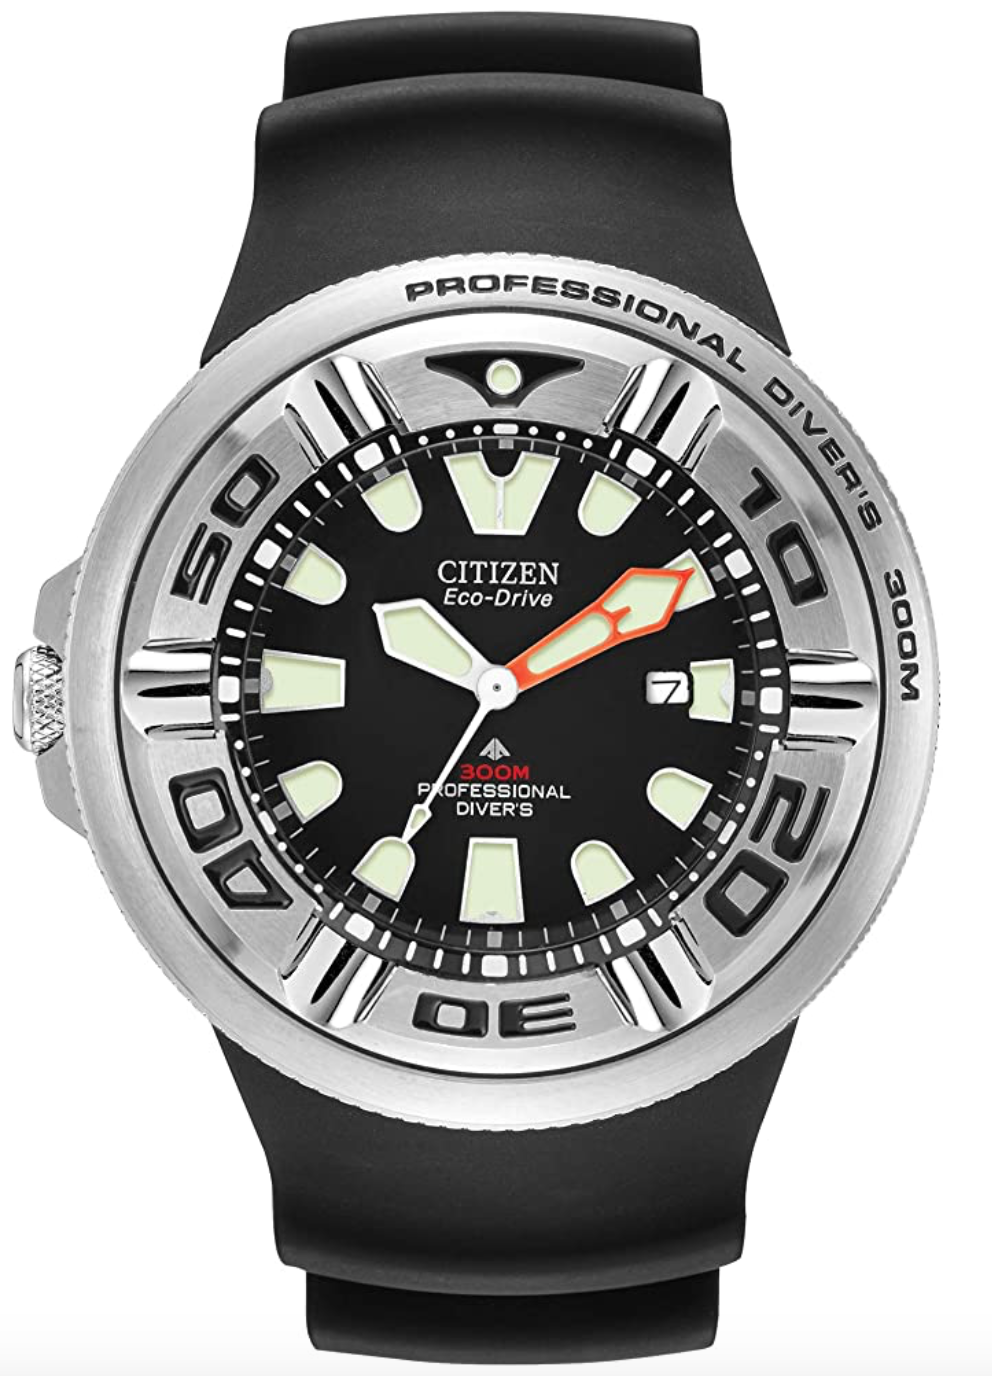 Citizen Men's Eco-Drive Promaster Diver Watch with Date, BJ8050-08E